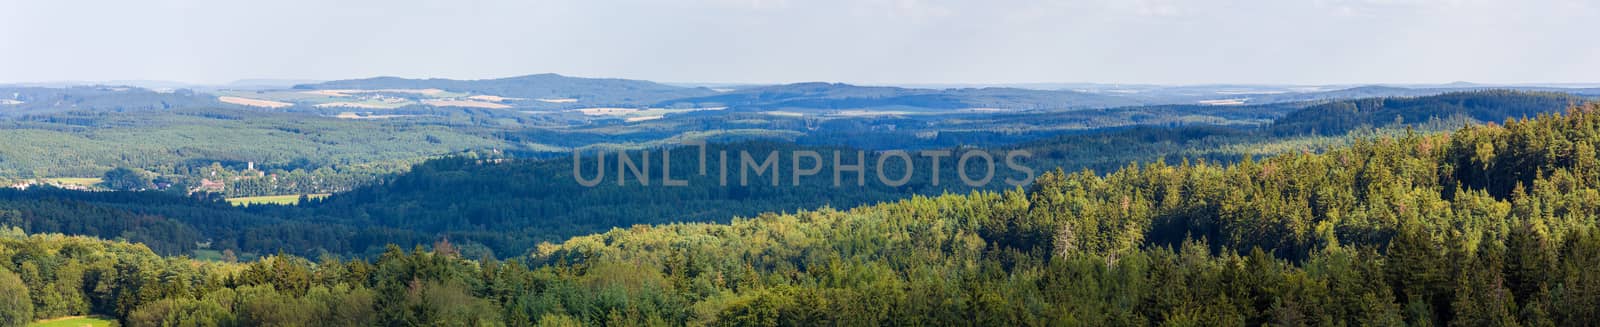 czech national park landscape known as Czech Canada